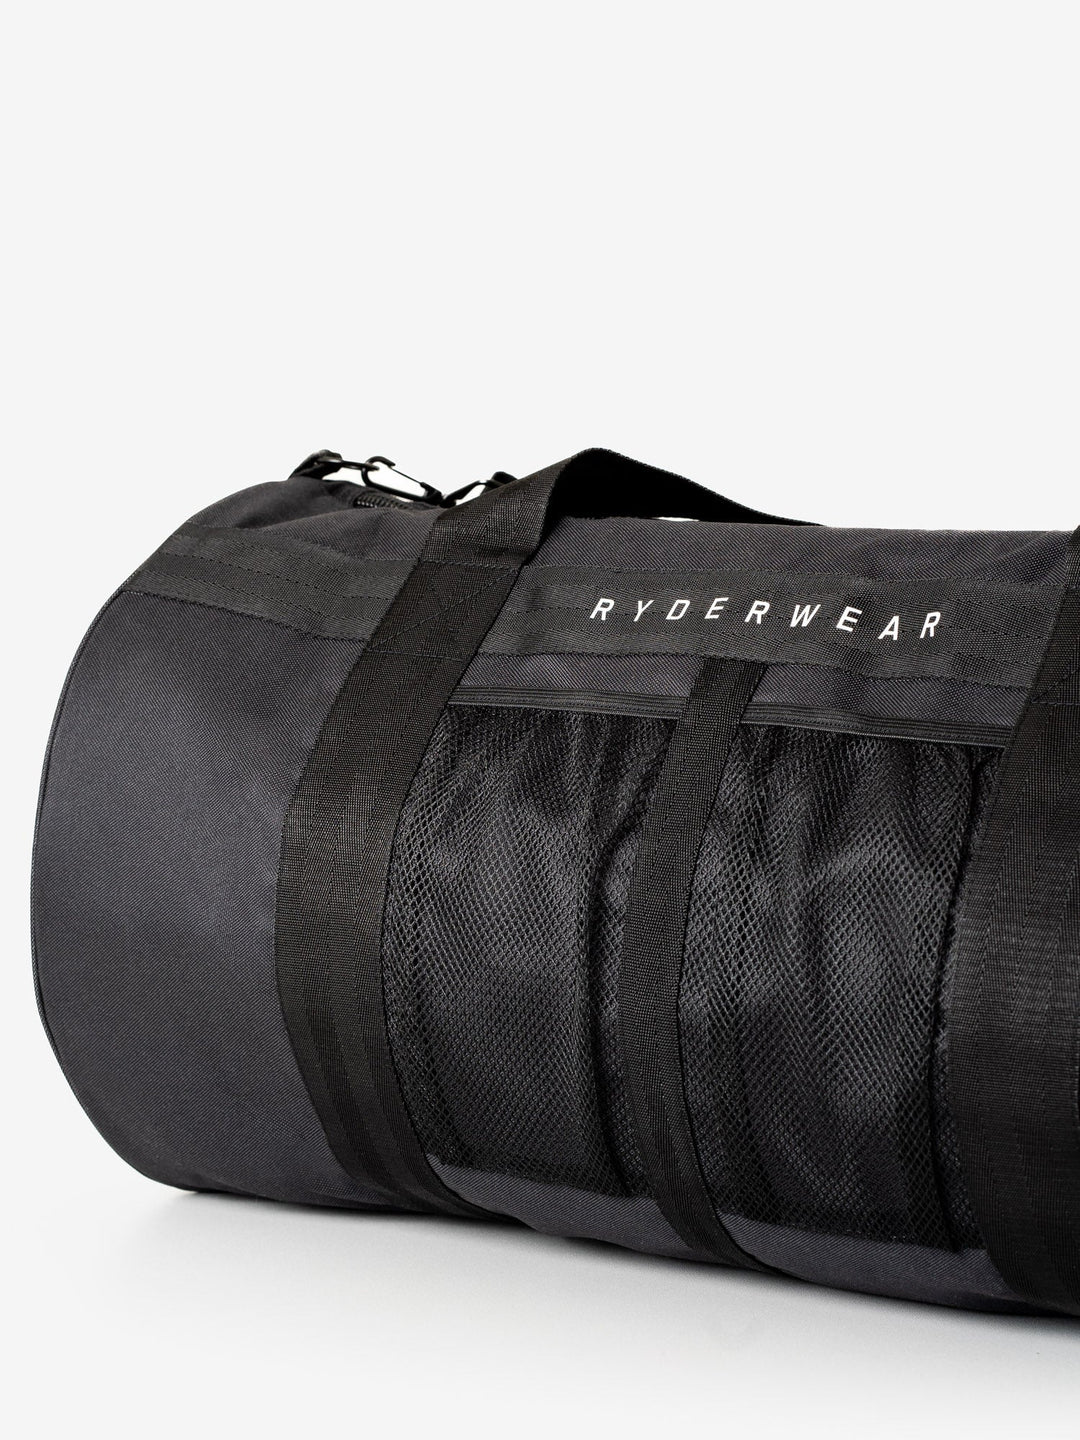 Duty Duffle Bag - Black Accessories Ryderwear 